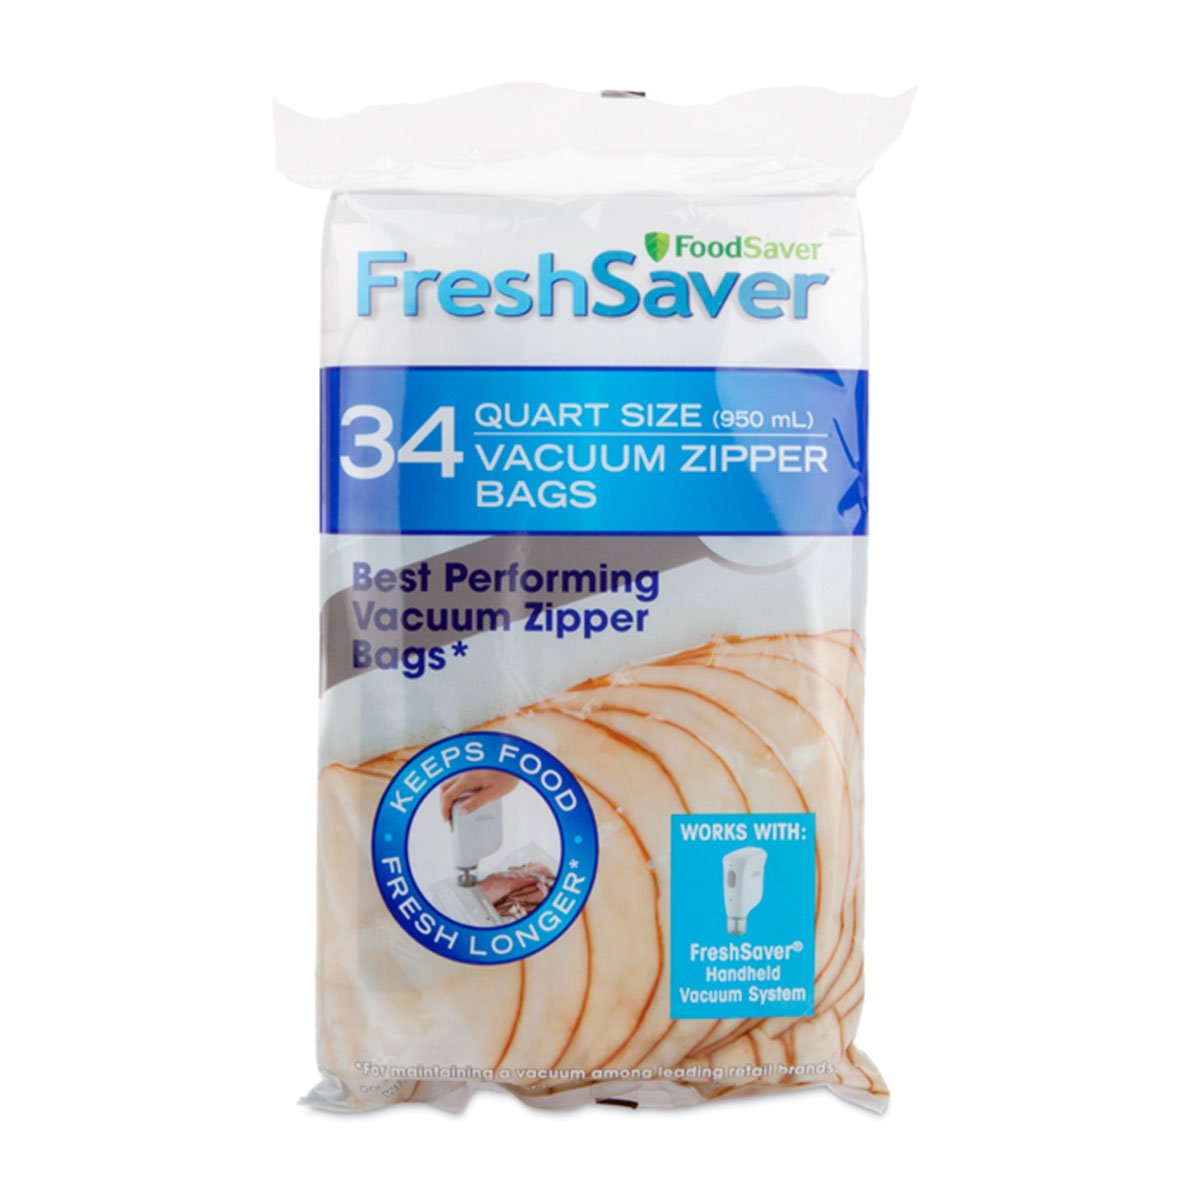 FoodSaver FreshSaver 1 Gallon Zipper Bags 12pk 